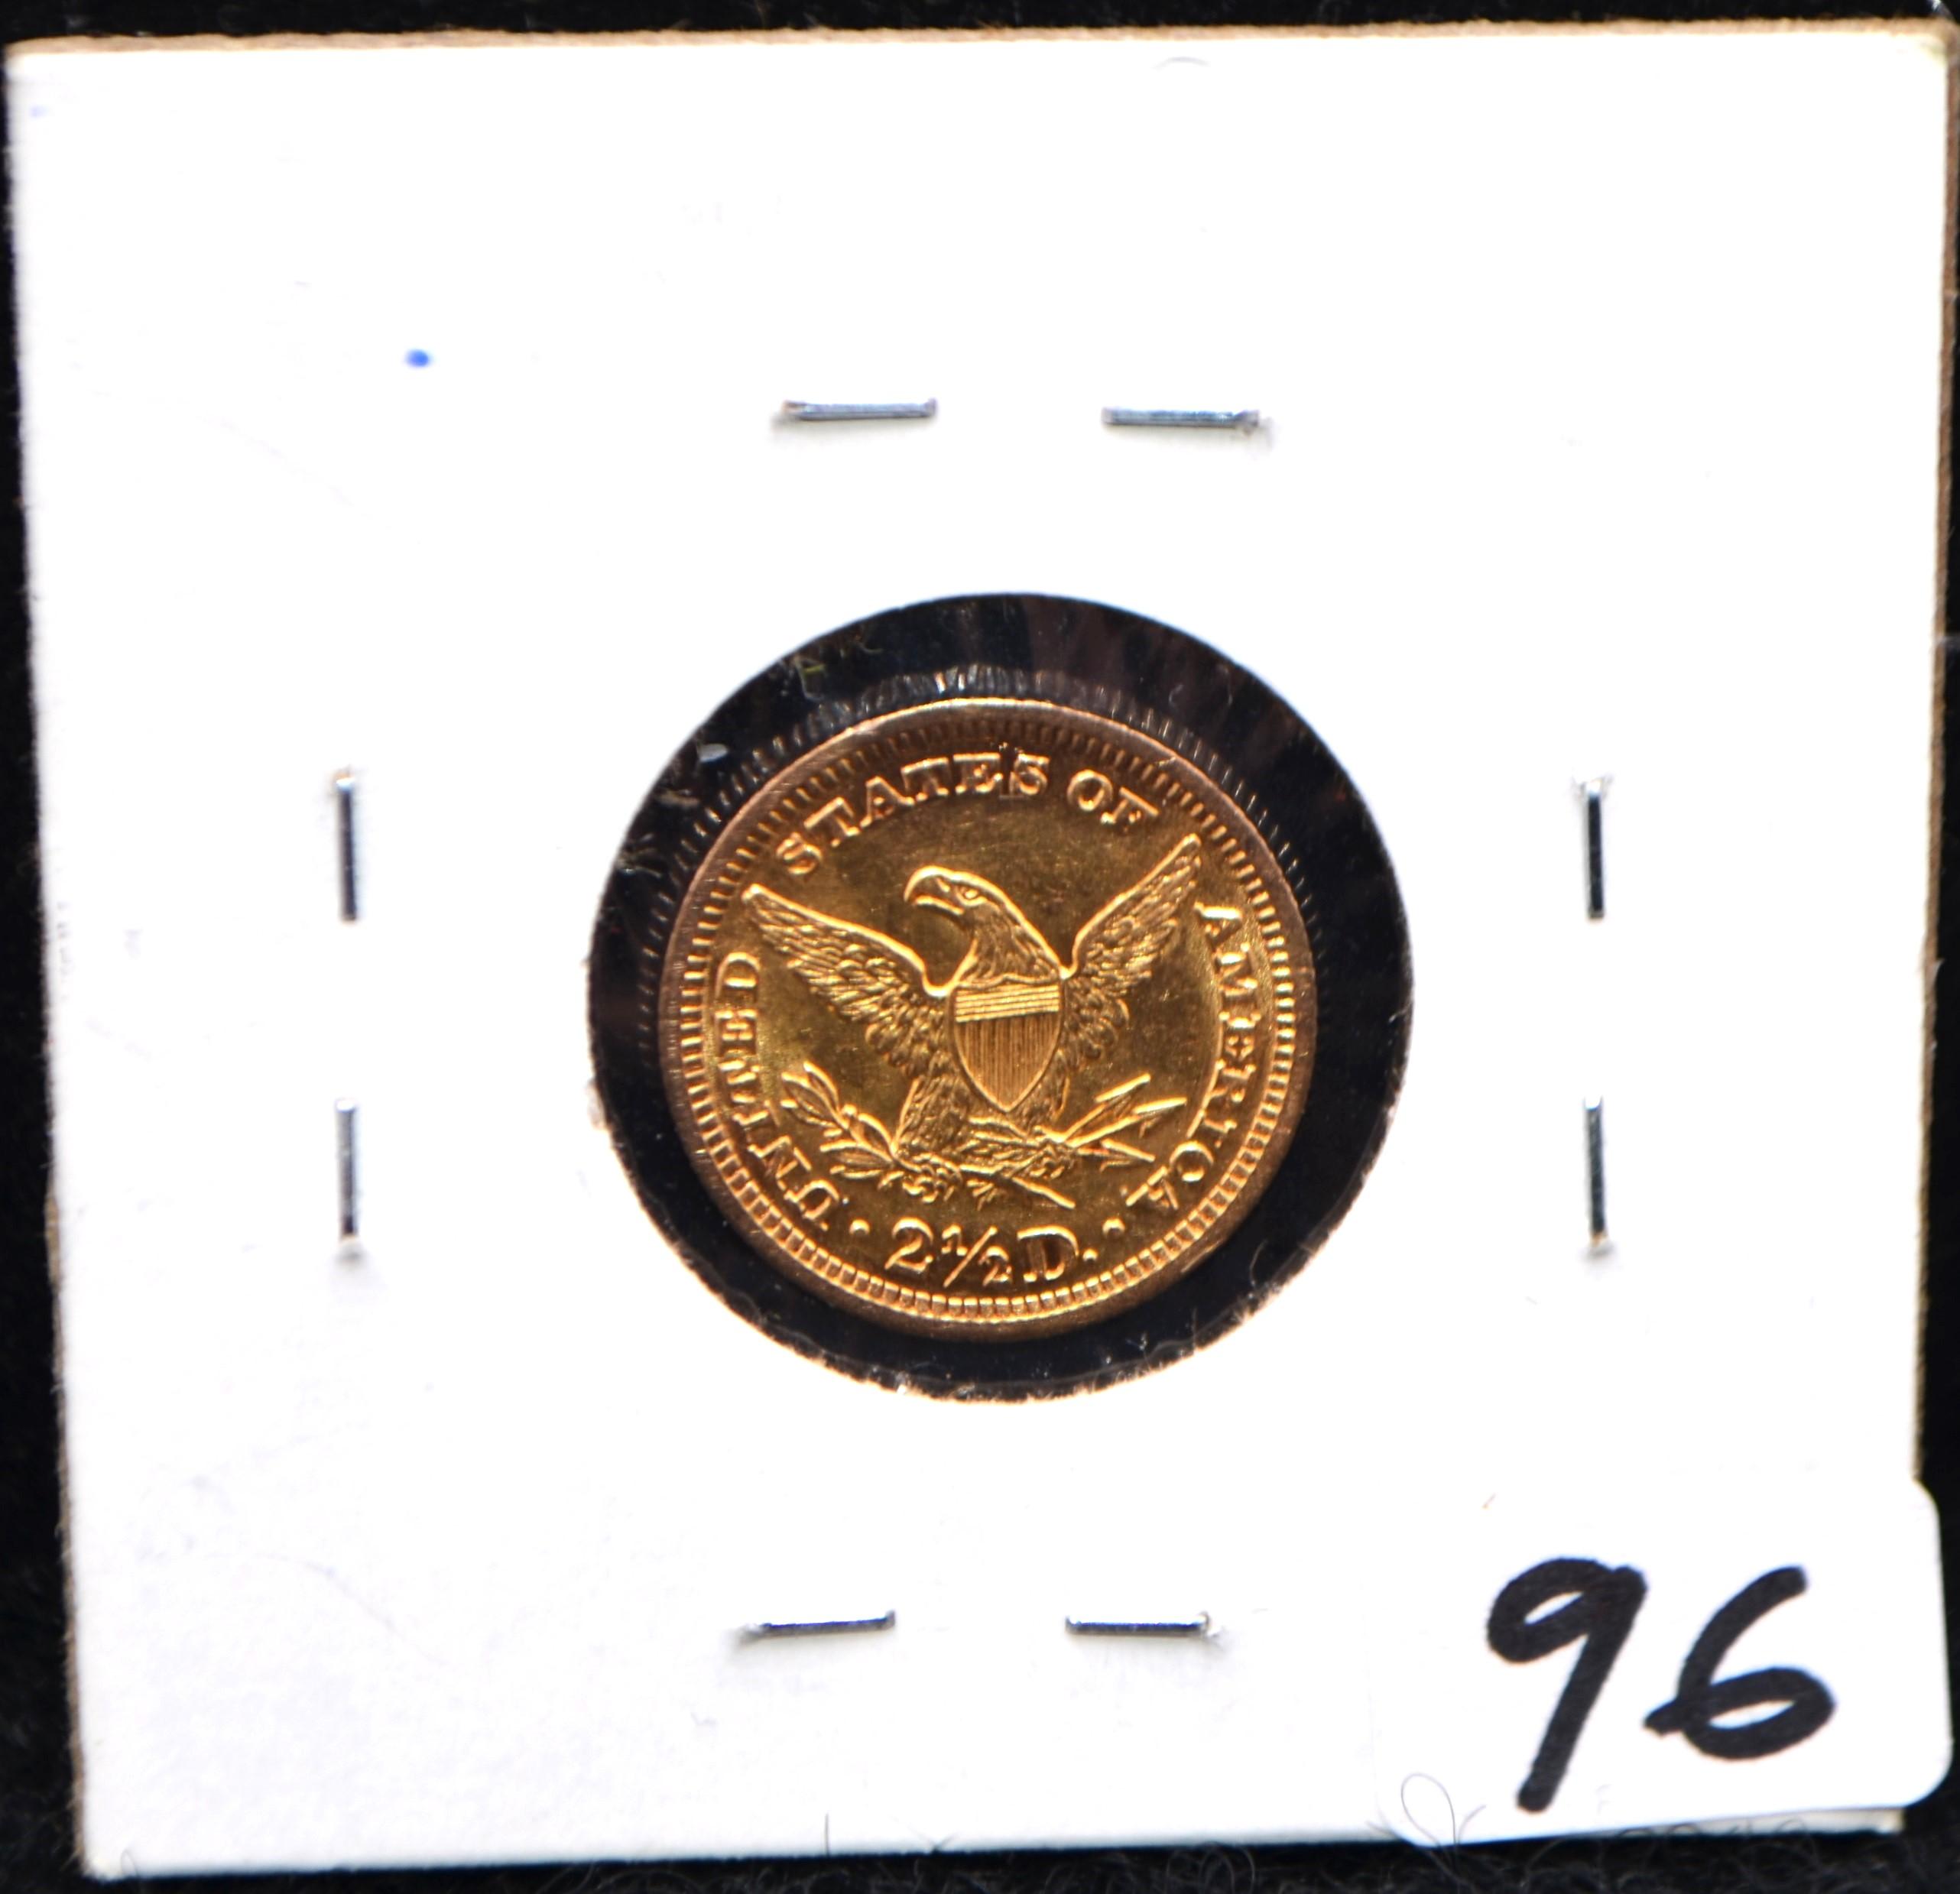 1906 $2 1/2 LIBERTY HEAD GOLD COIN